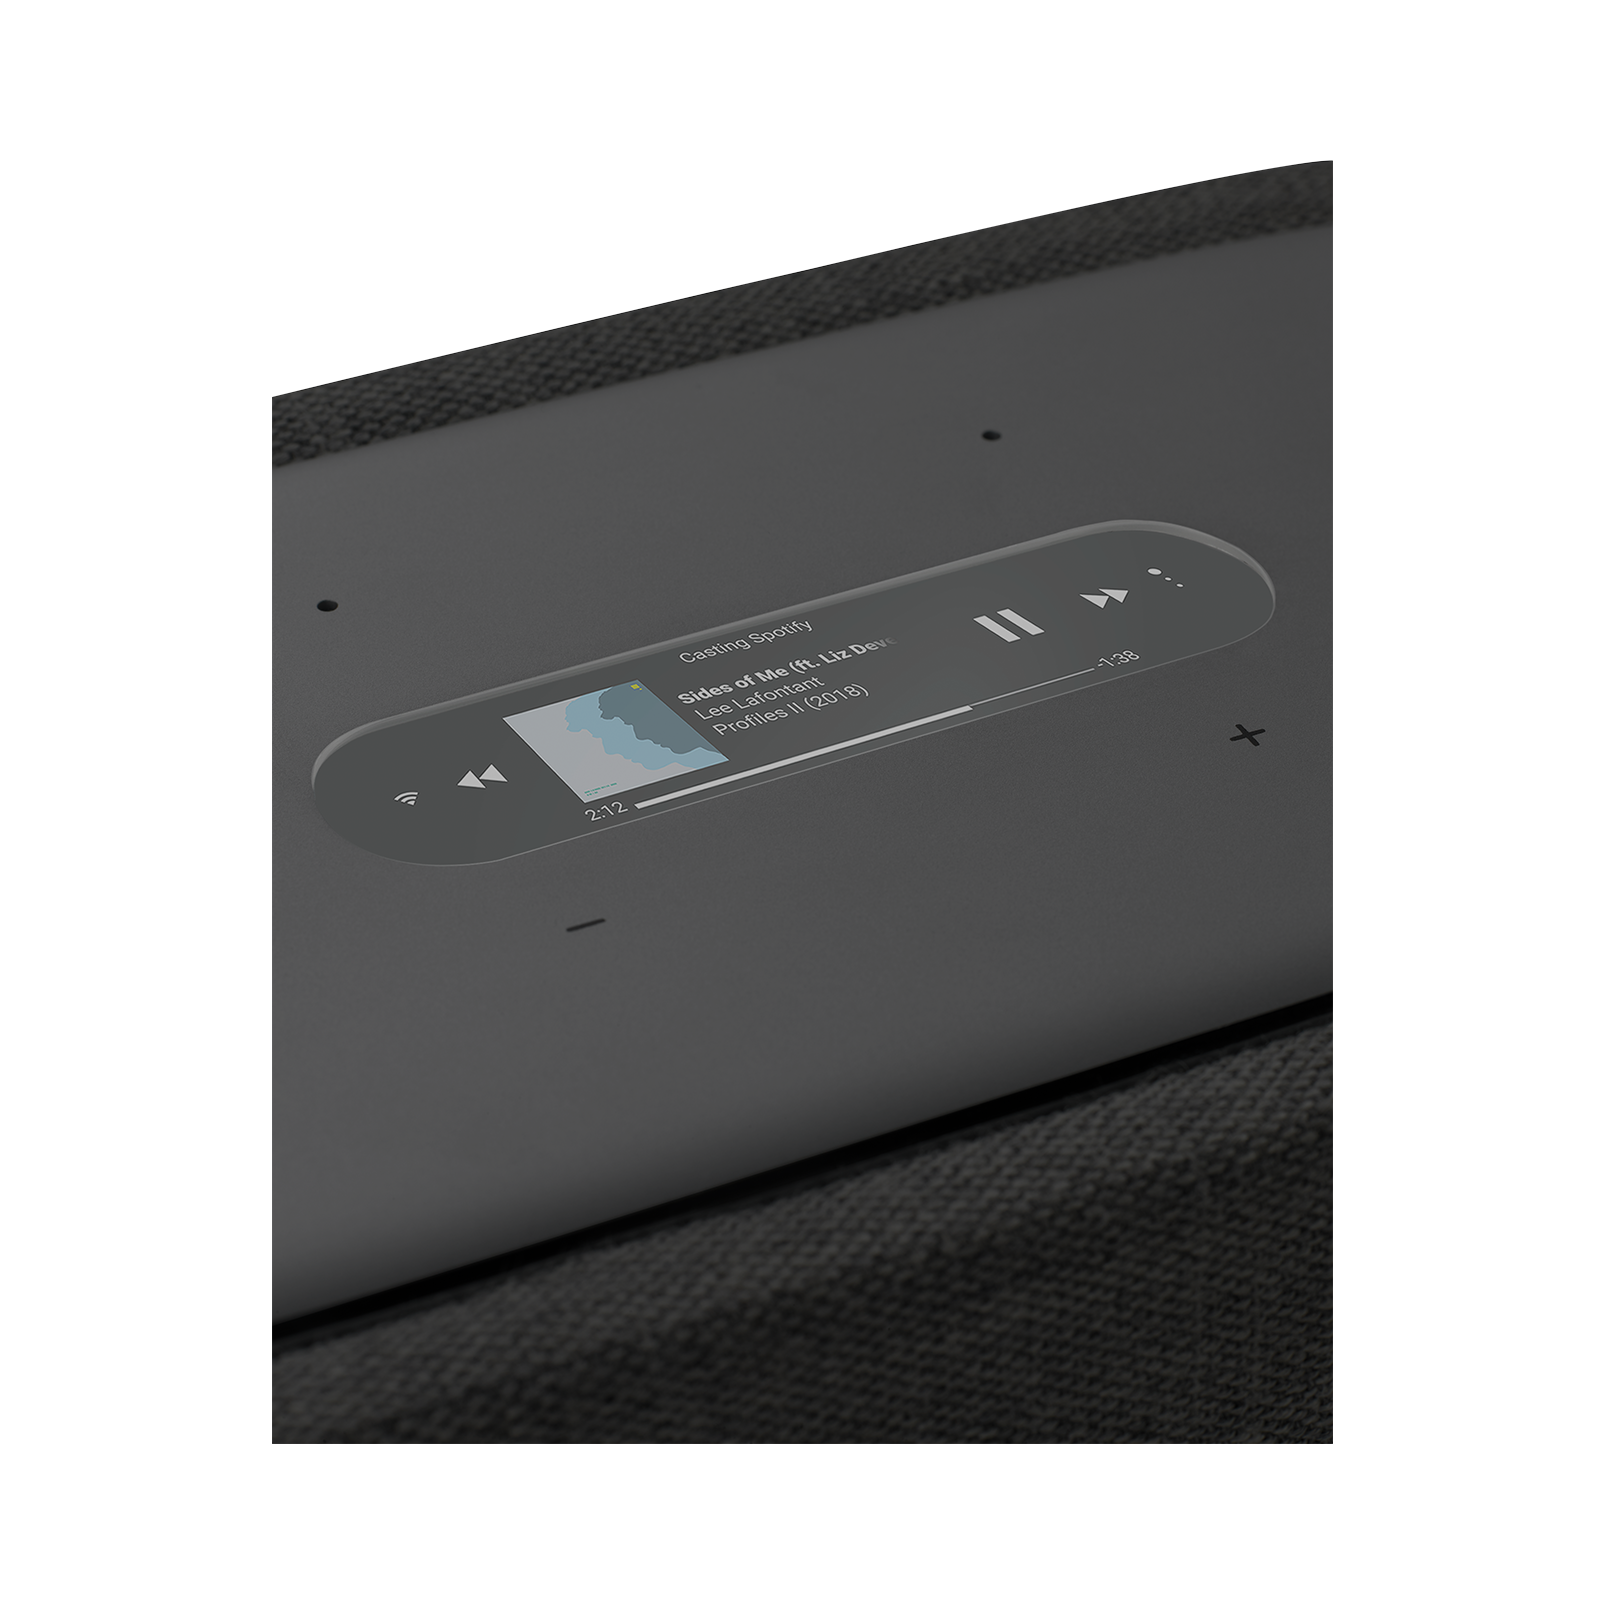 Harman Kardon Citation 300 - Black - The medium-size smart home speaker with award winning design - Detailshot 1